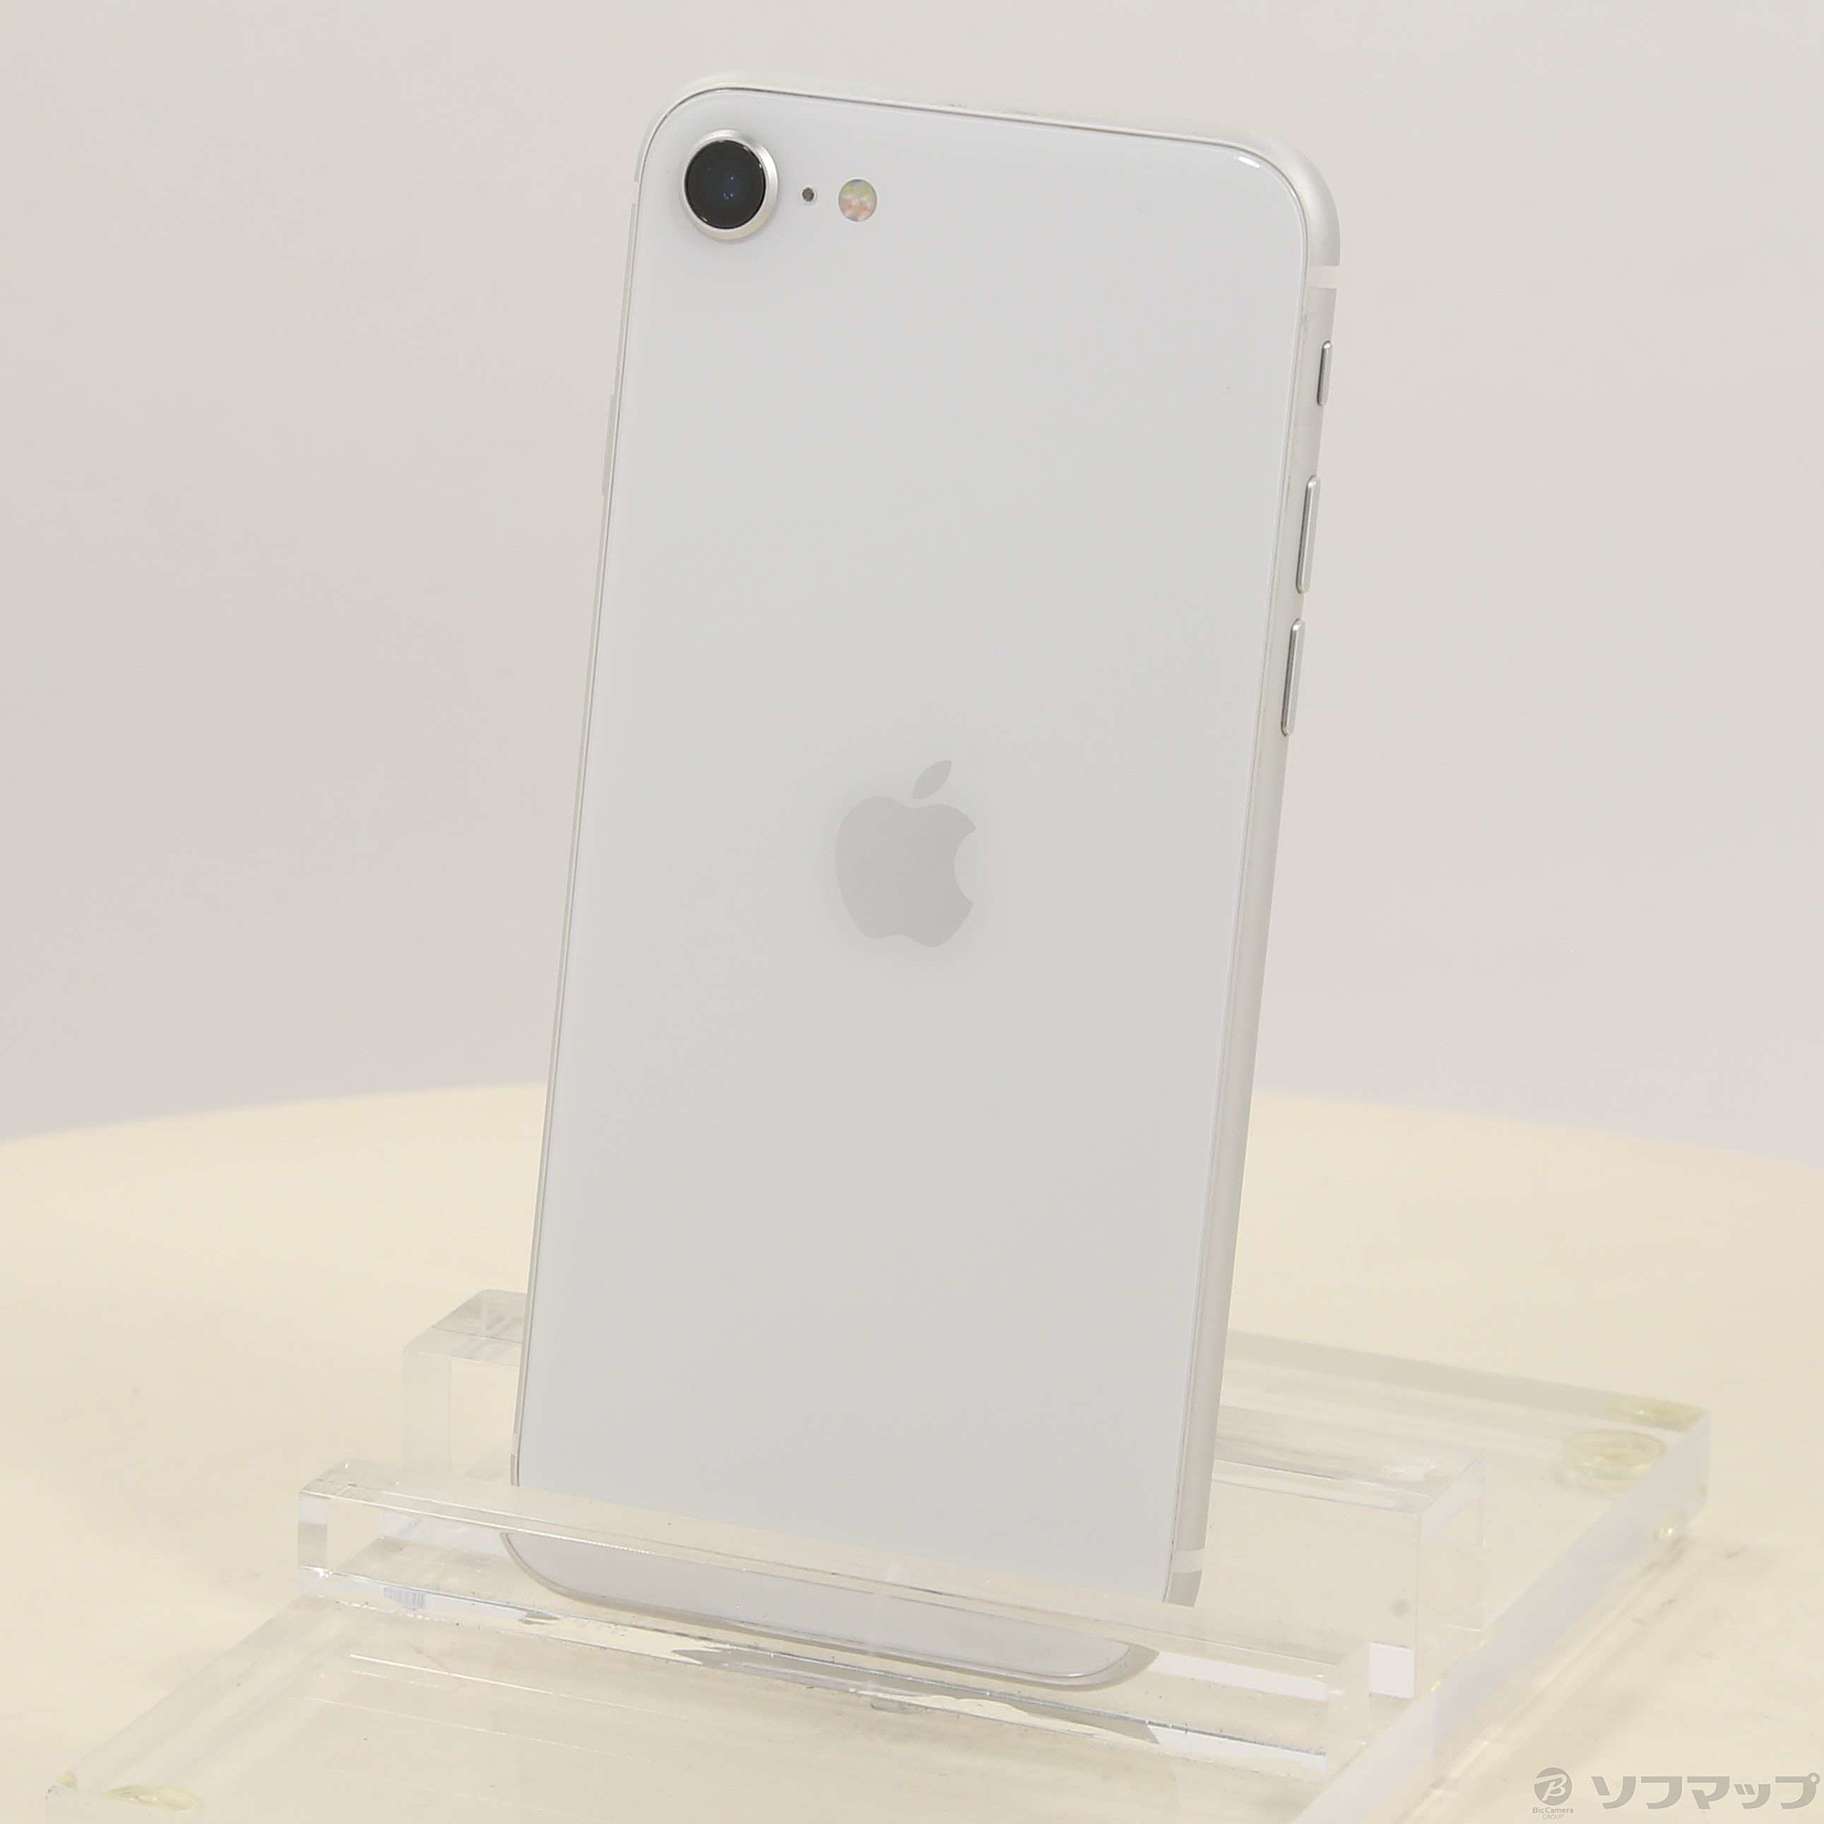 B iPhone SE 第2世代 (SE2) ホワイト 64 GB SIMフリー